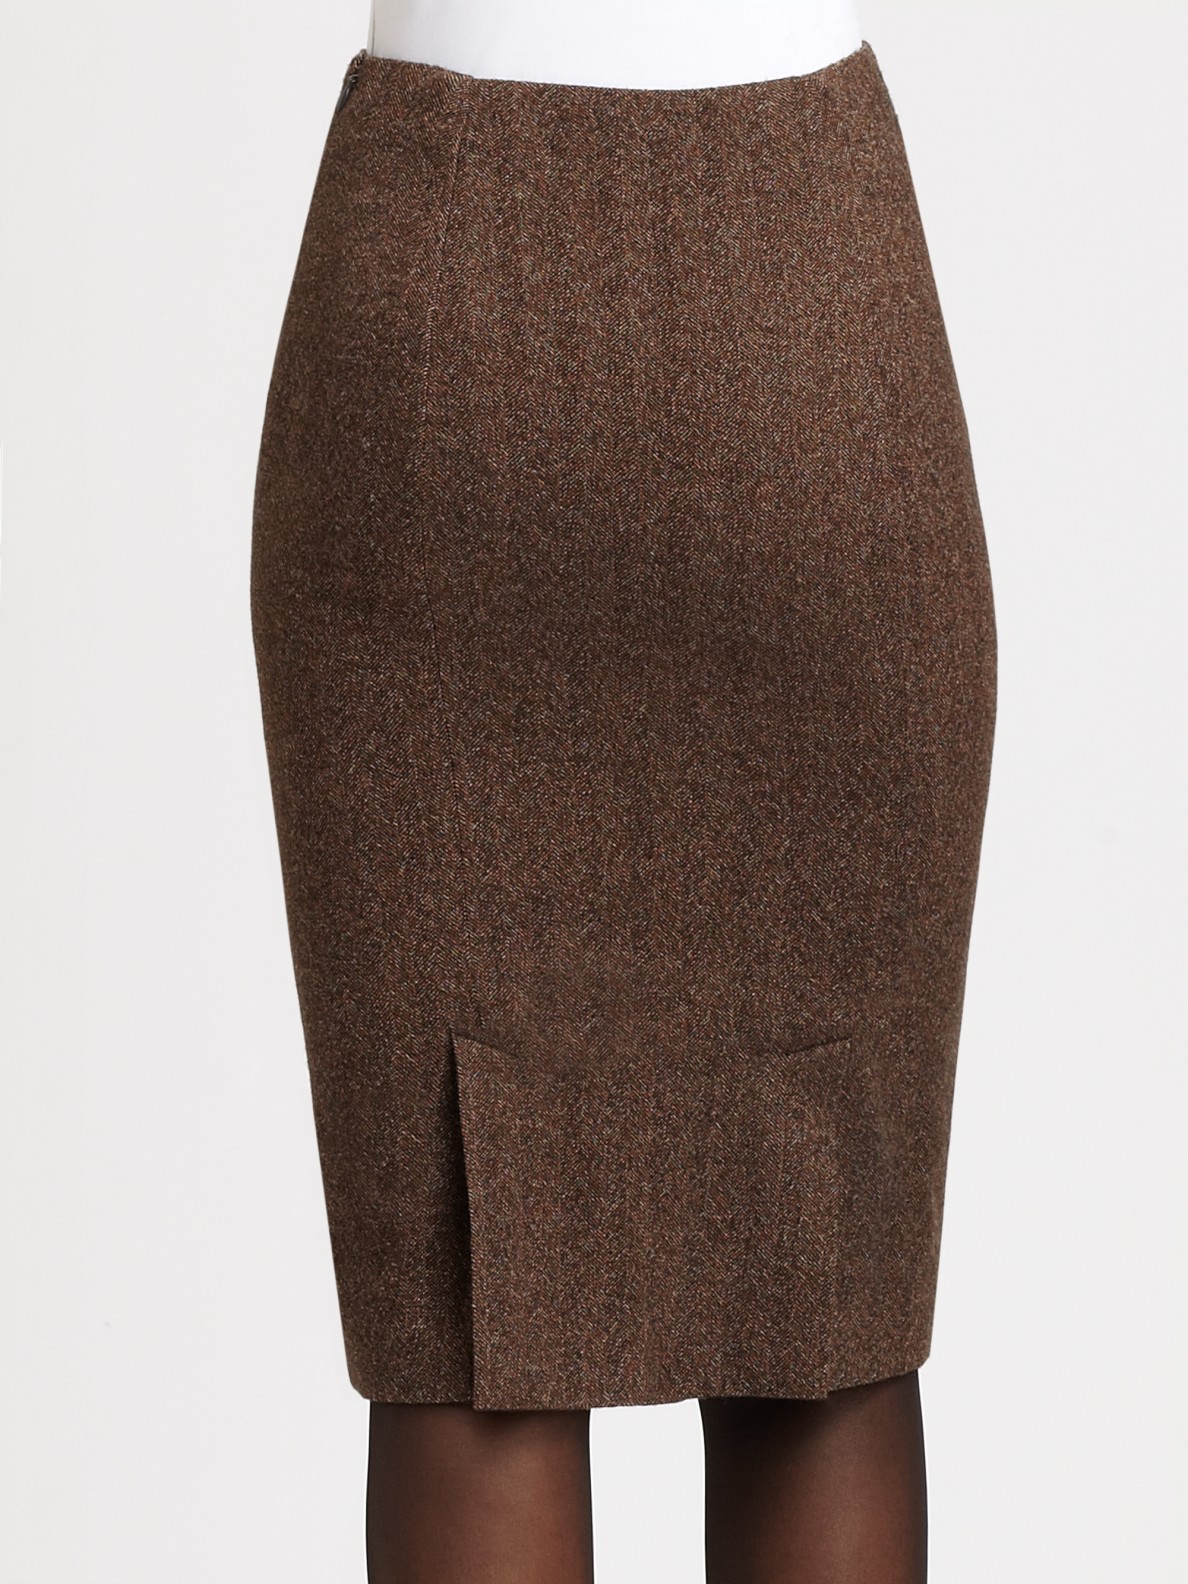 Ralph lauren black label Tweed Pencil Skirt in Brown | Lyst